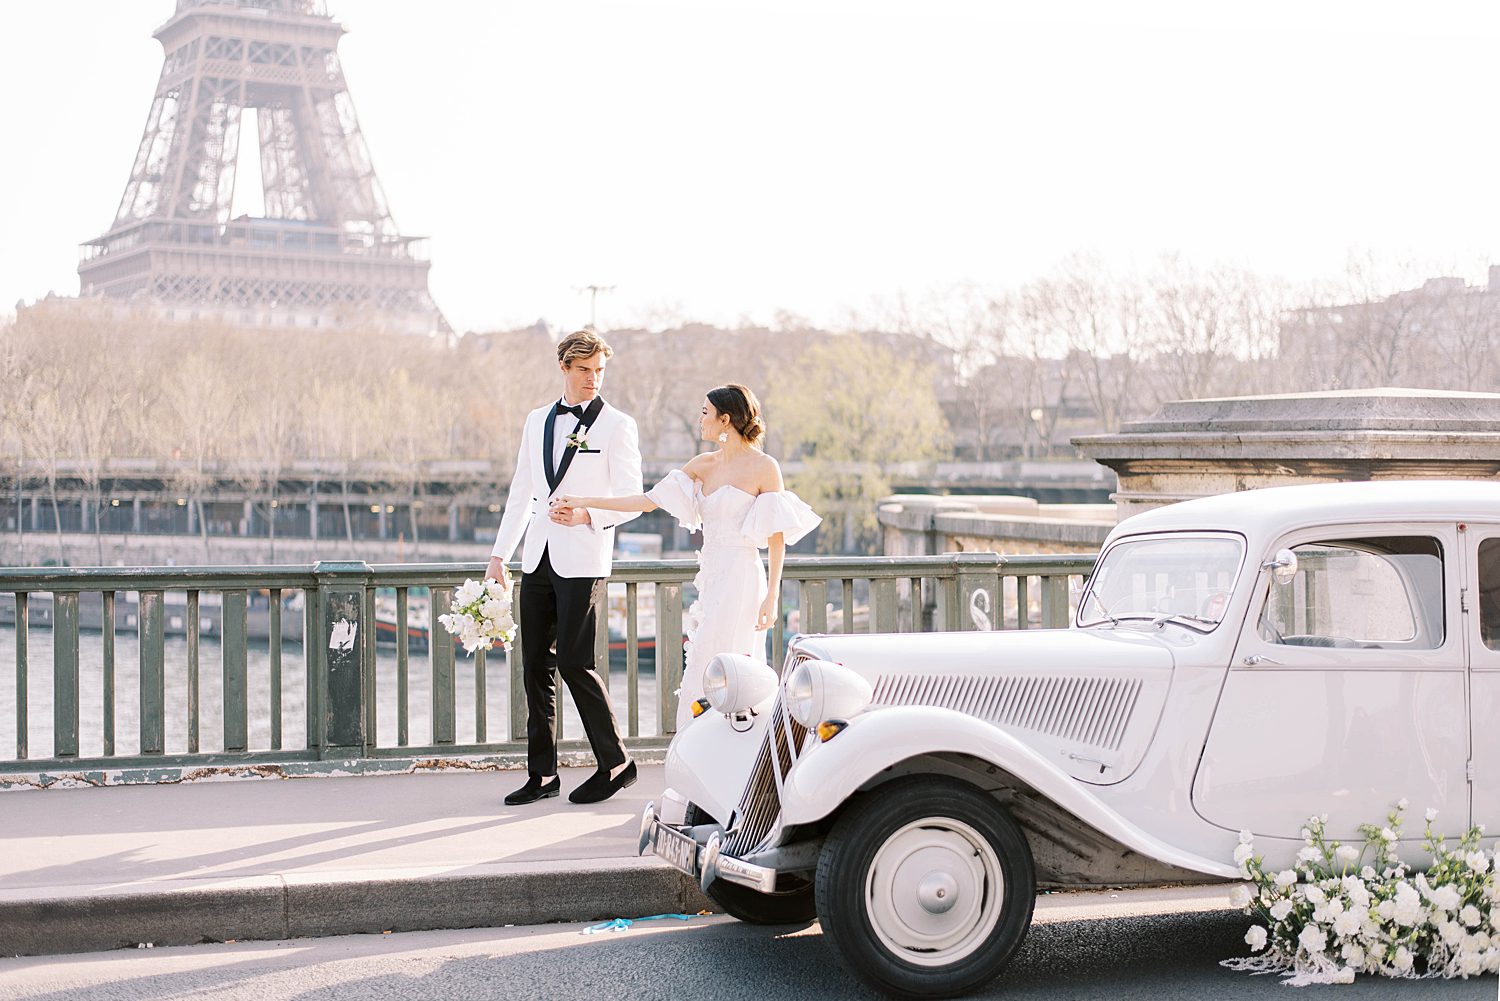 groom leads bride along bridge in Paris by white classic car